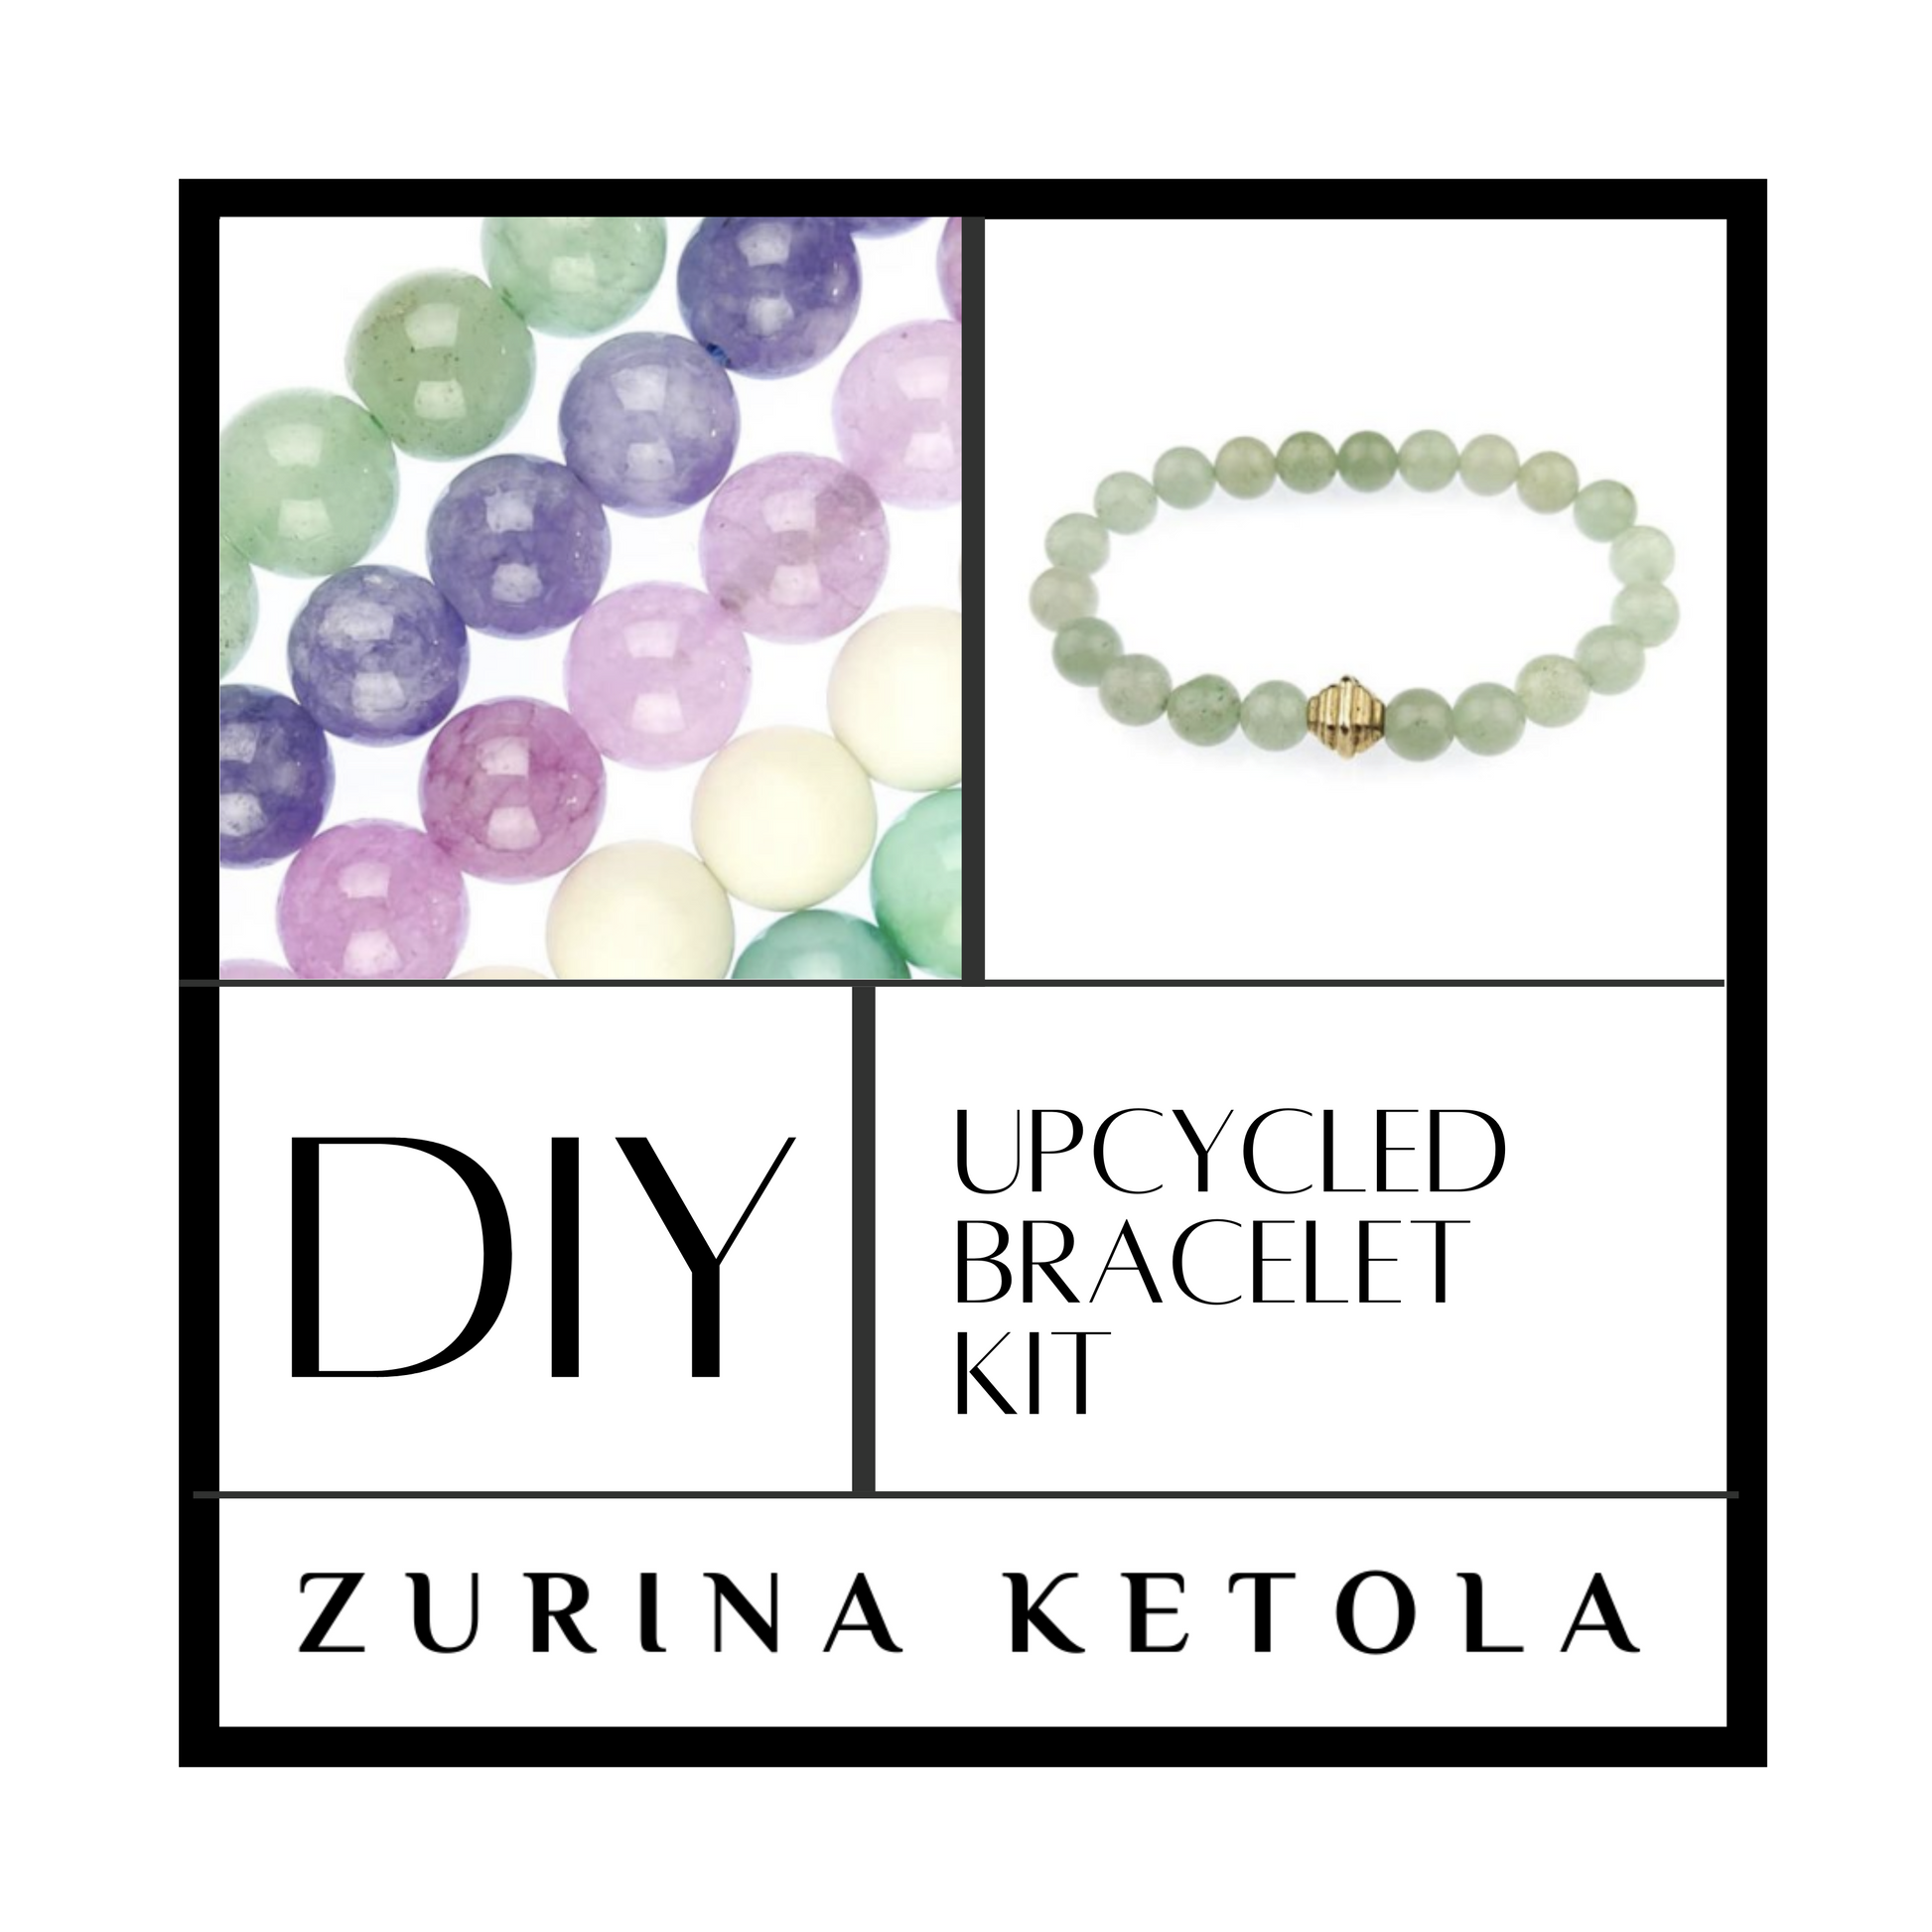 Zurina Ketola  DIY Upcycled Bracelet Kit